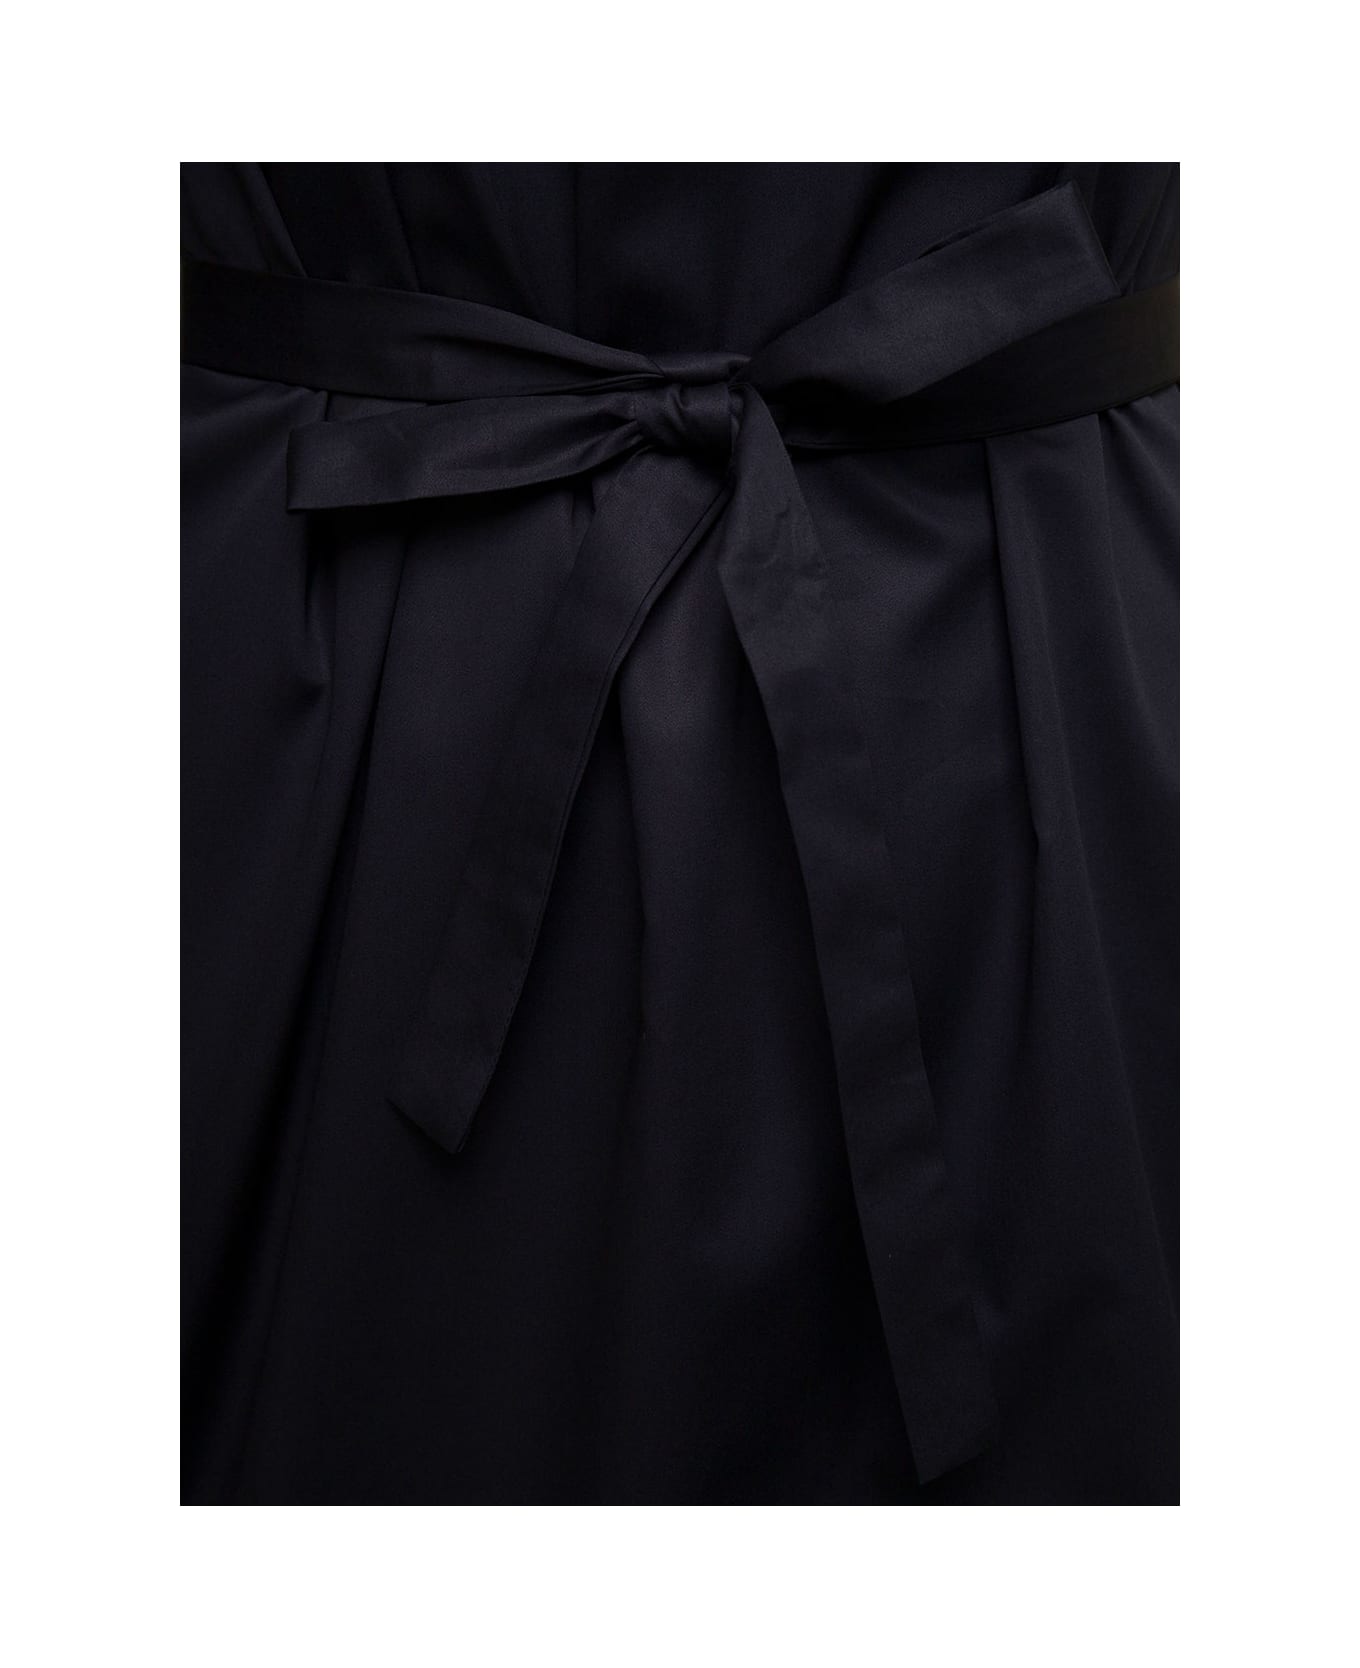 Douuod Mini Black One-shoulder Dress With Waist Belt In Cotton Woman - Black